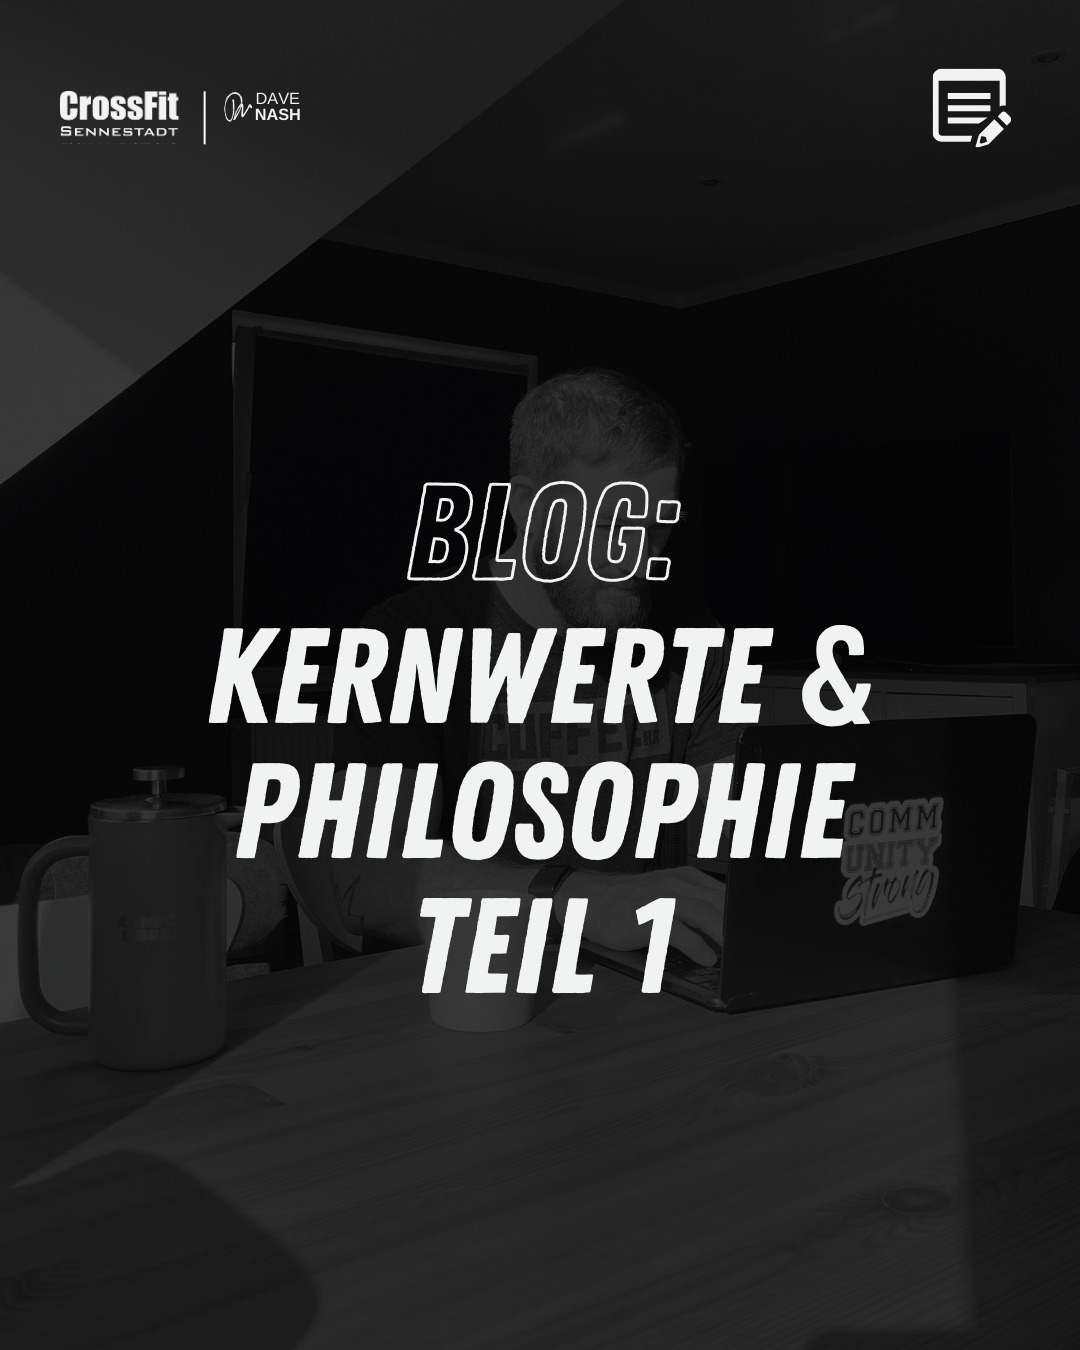 Unsere Kernwerte & Philosophie - Teil 1